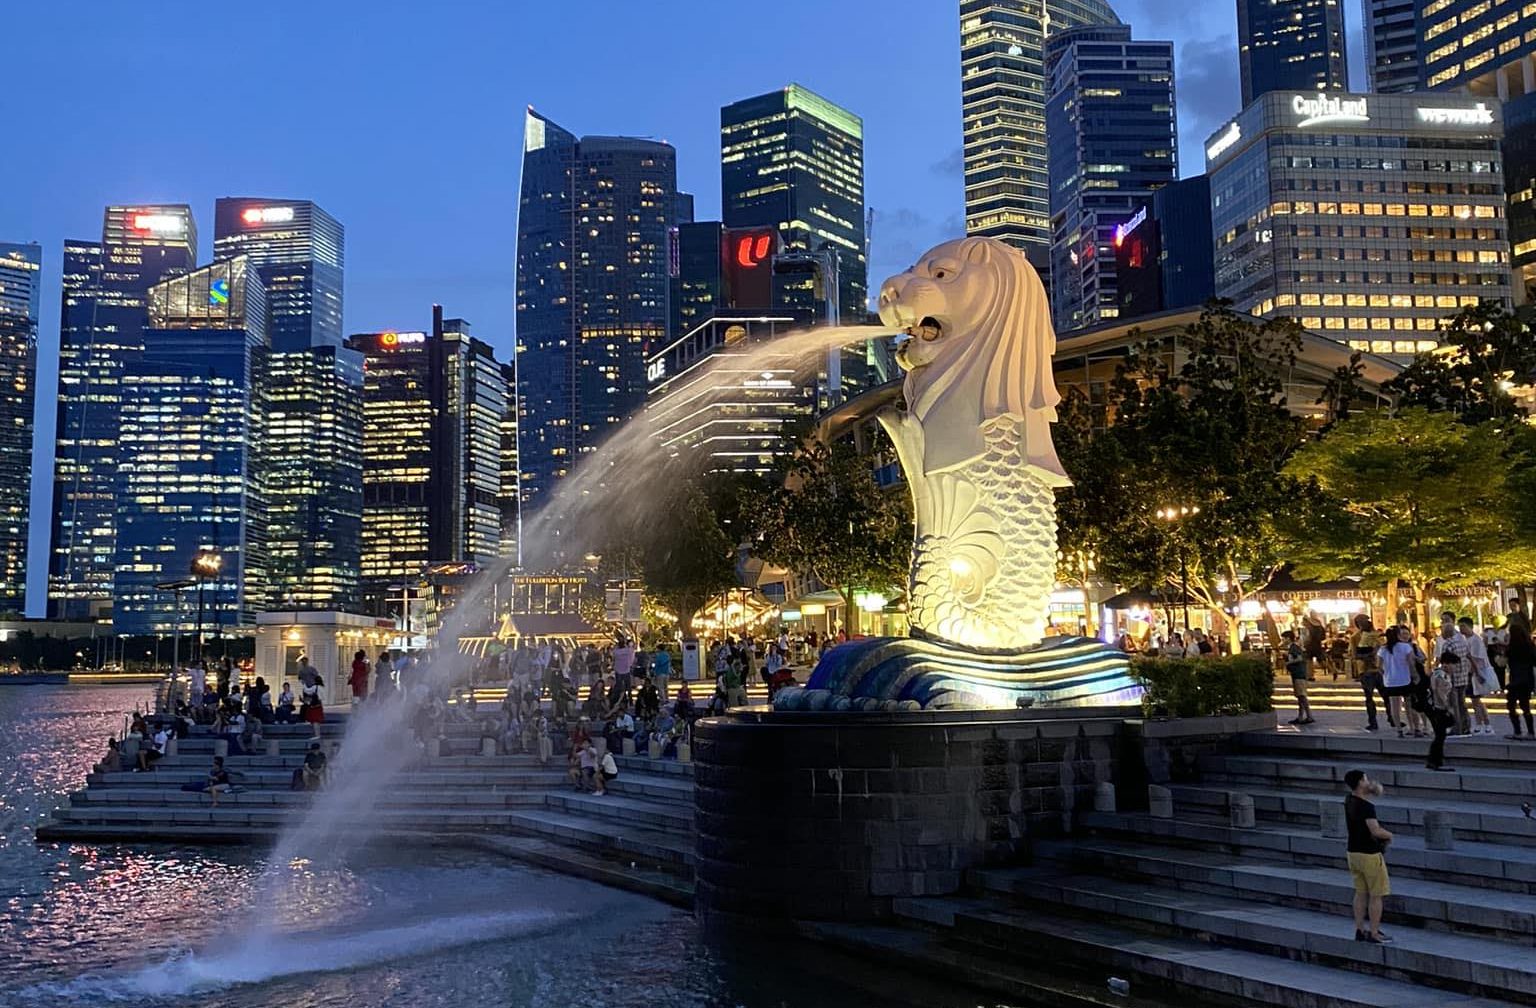 The Merlion Park Singapore